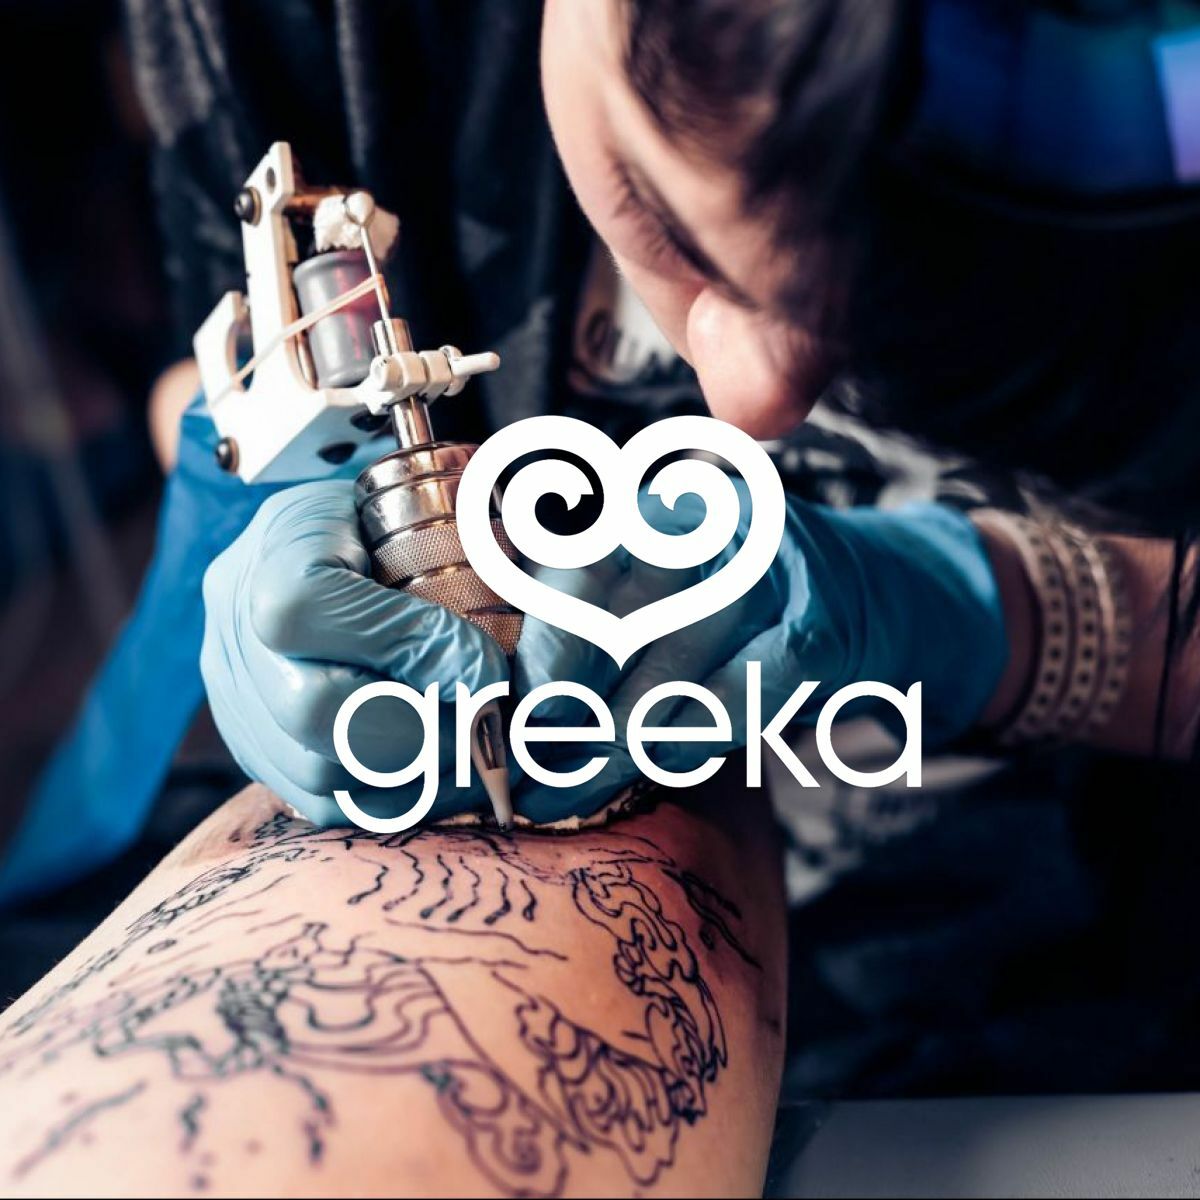 Greek Mythology Tattoos – Ideas, Designs and Meaning - Symbol Sage